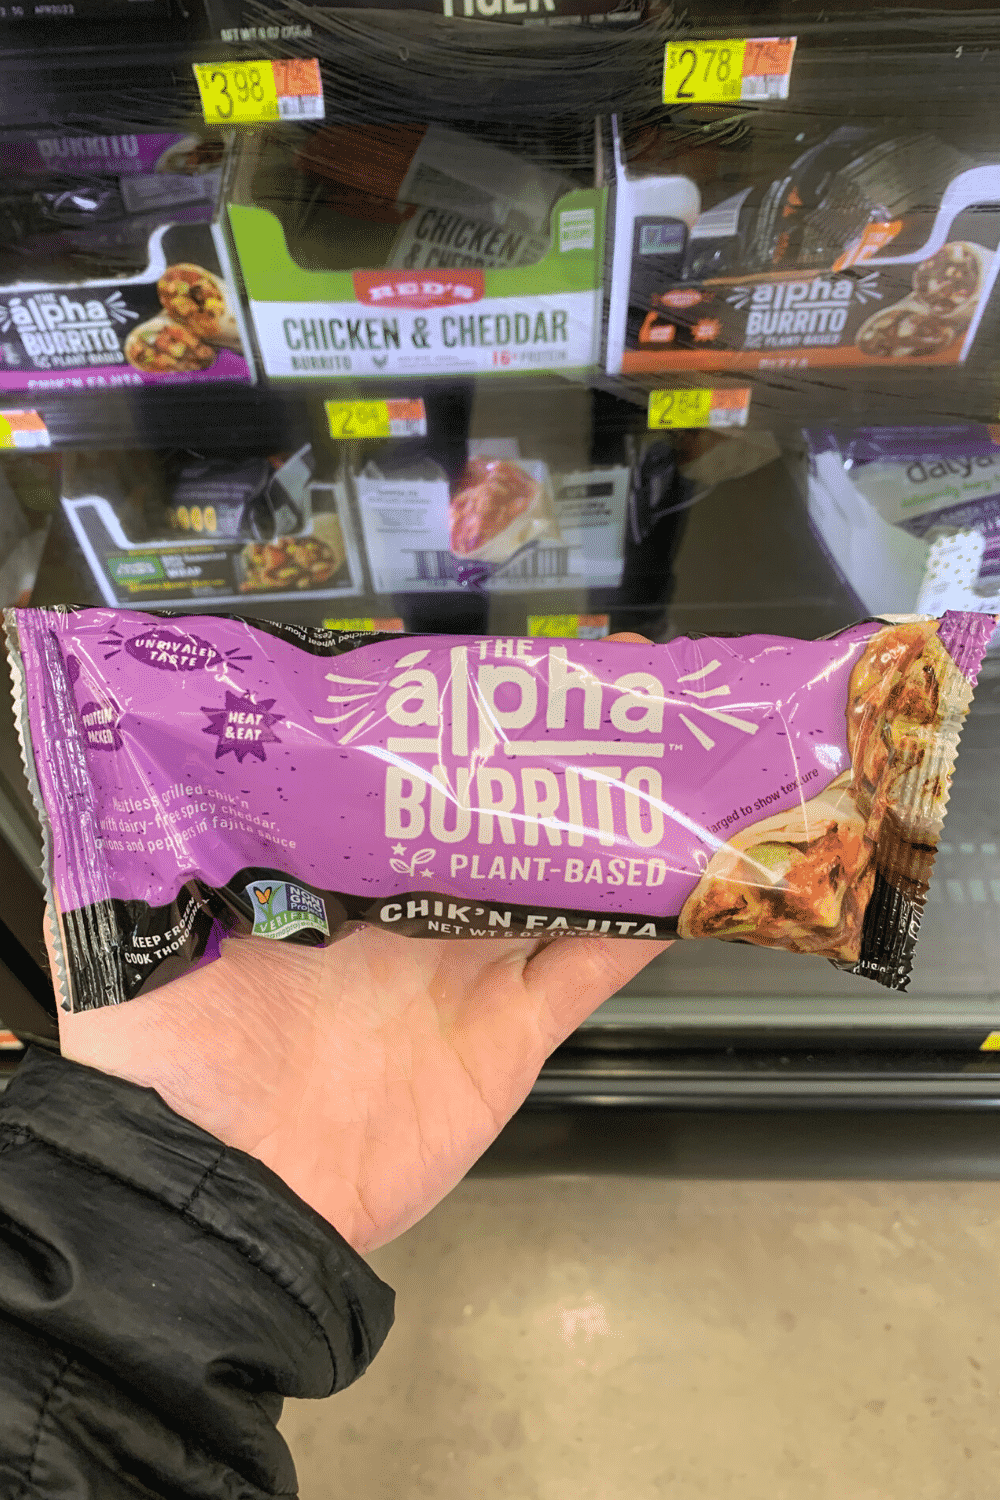 A hand holding the Alfa burrito plant-based chik'n fajita.